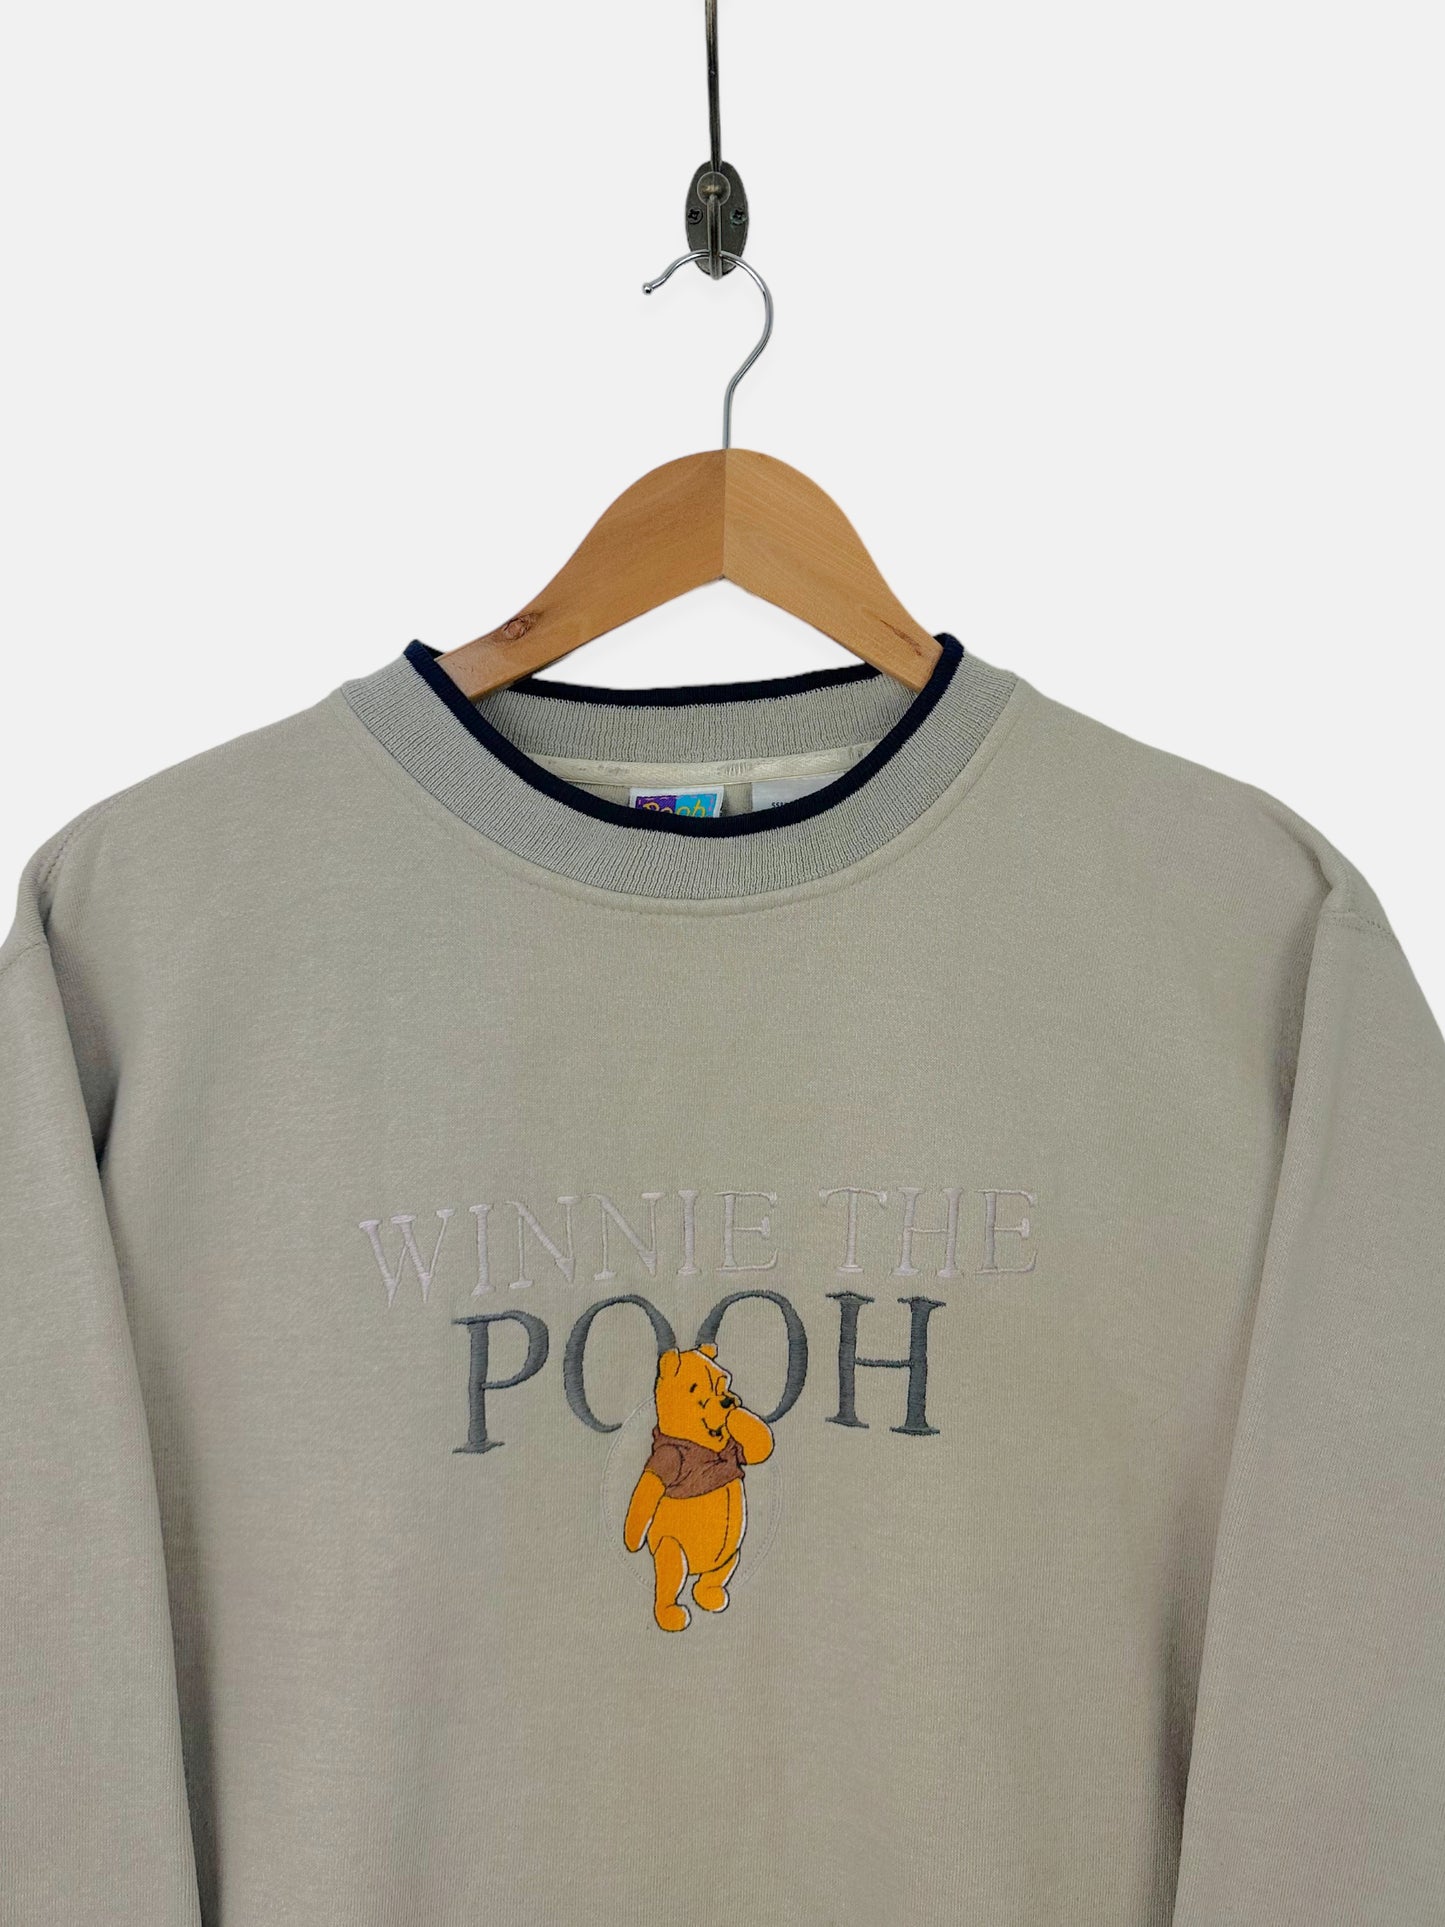 90's Disney Winnie The Pooh Embroidered Vintage Sweatshirt Size M-L